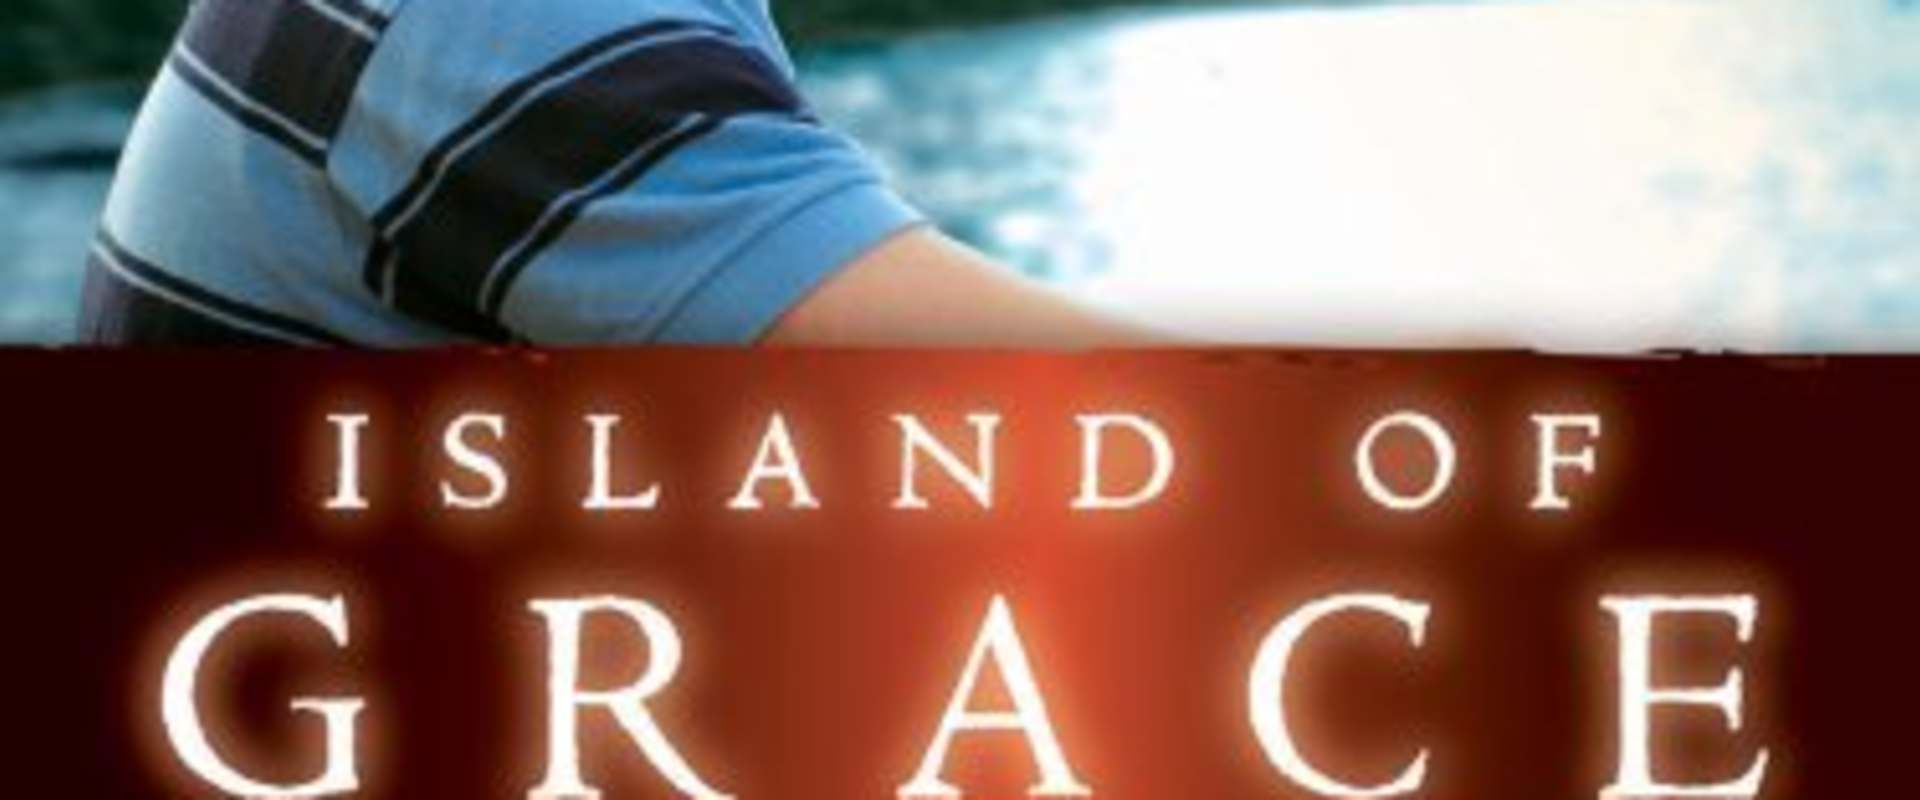 Island of Grace background 1